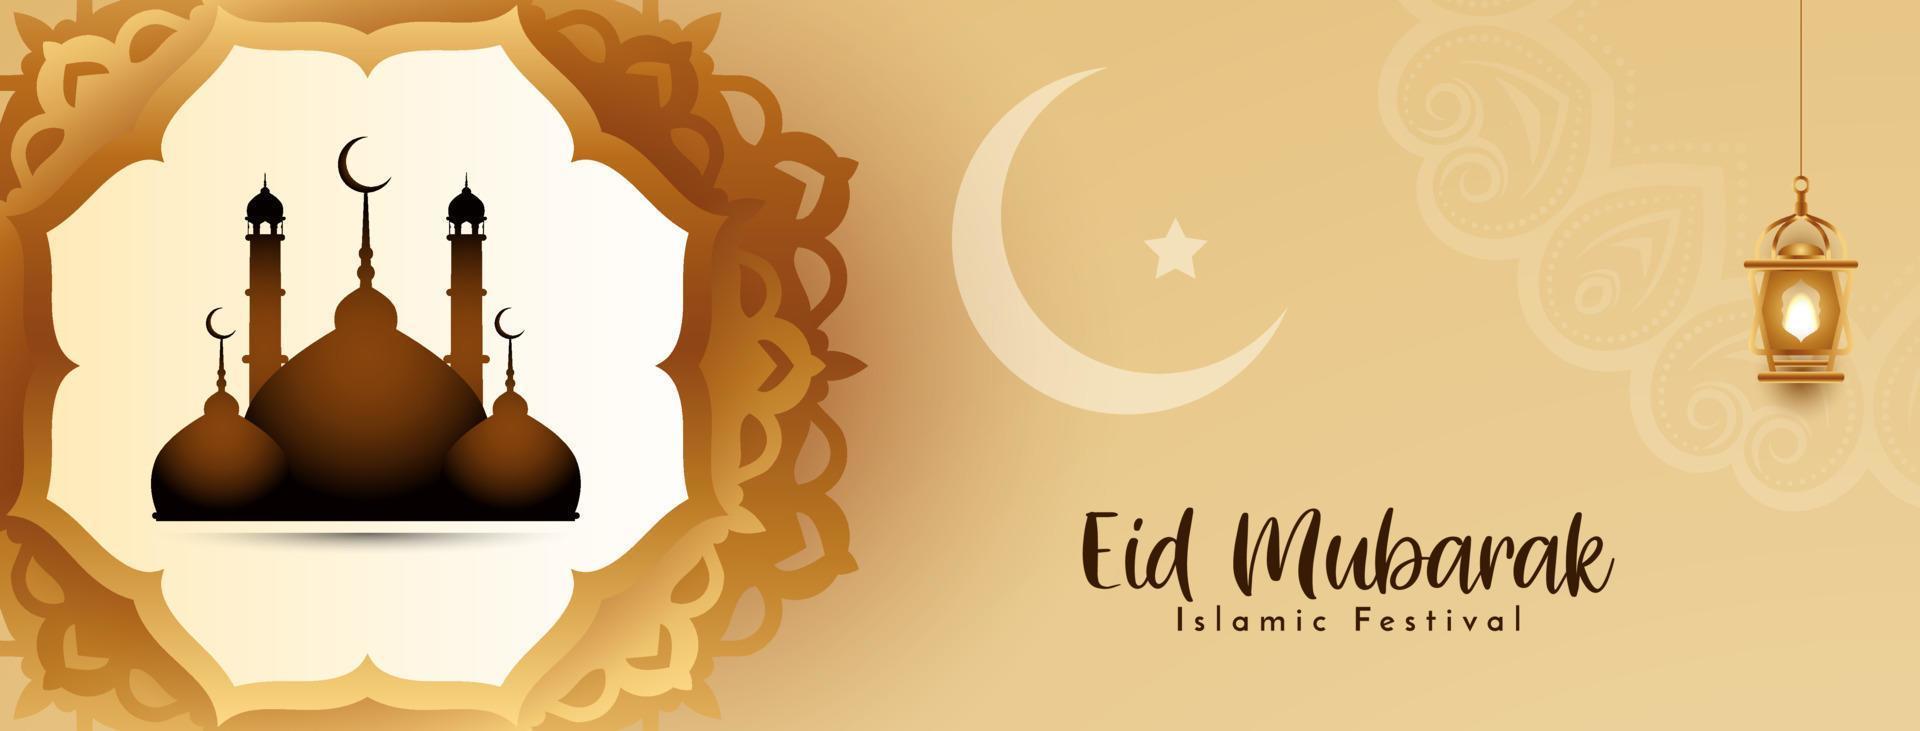 Cultural Eid Mubarak islamic festival celebration banner design vector